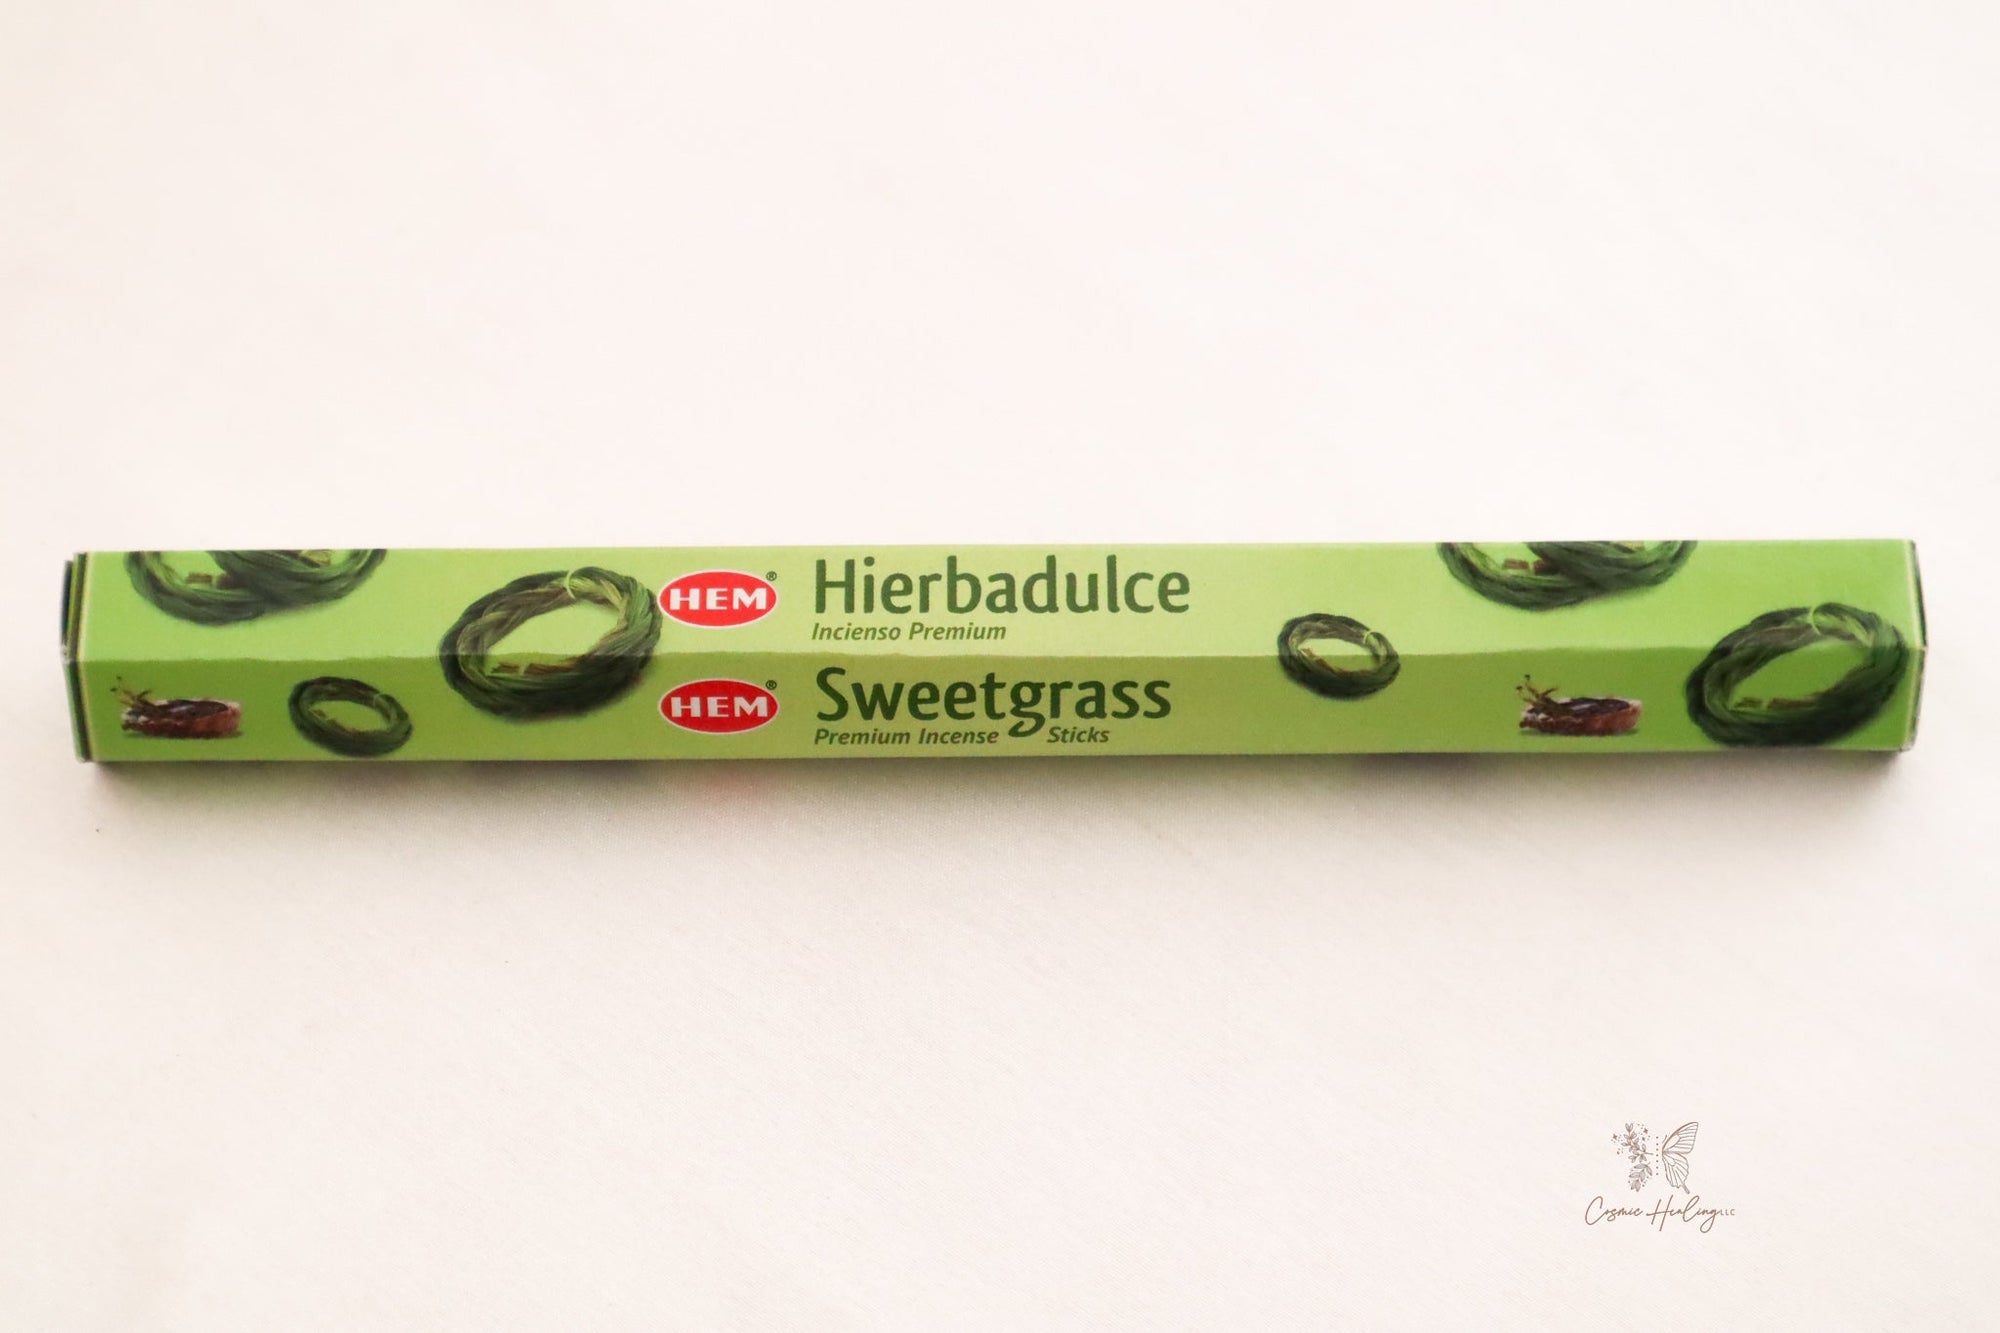 Sweetgrass Incense 20 Stick, HEM- Incienso Hierbadulce - Shop Cosmic Healing